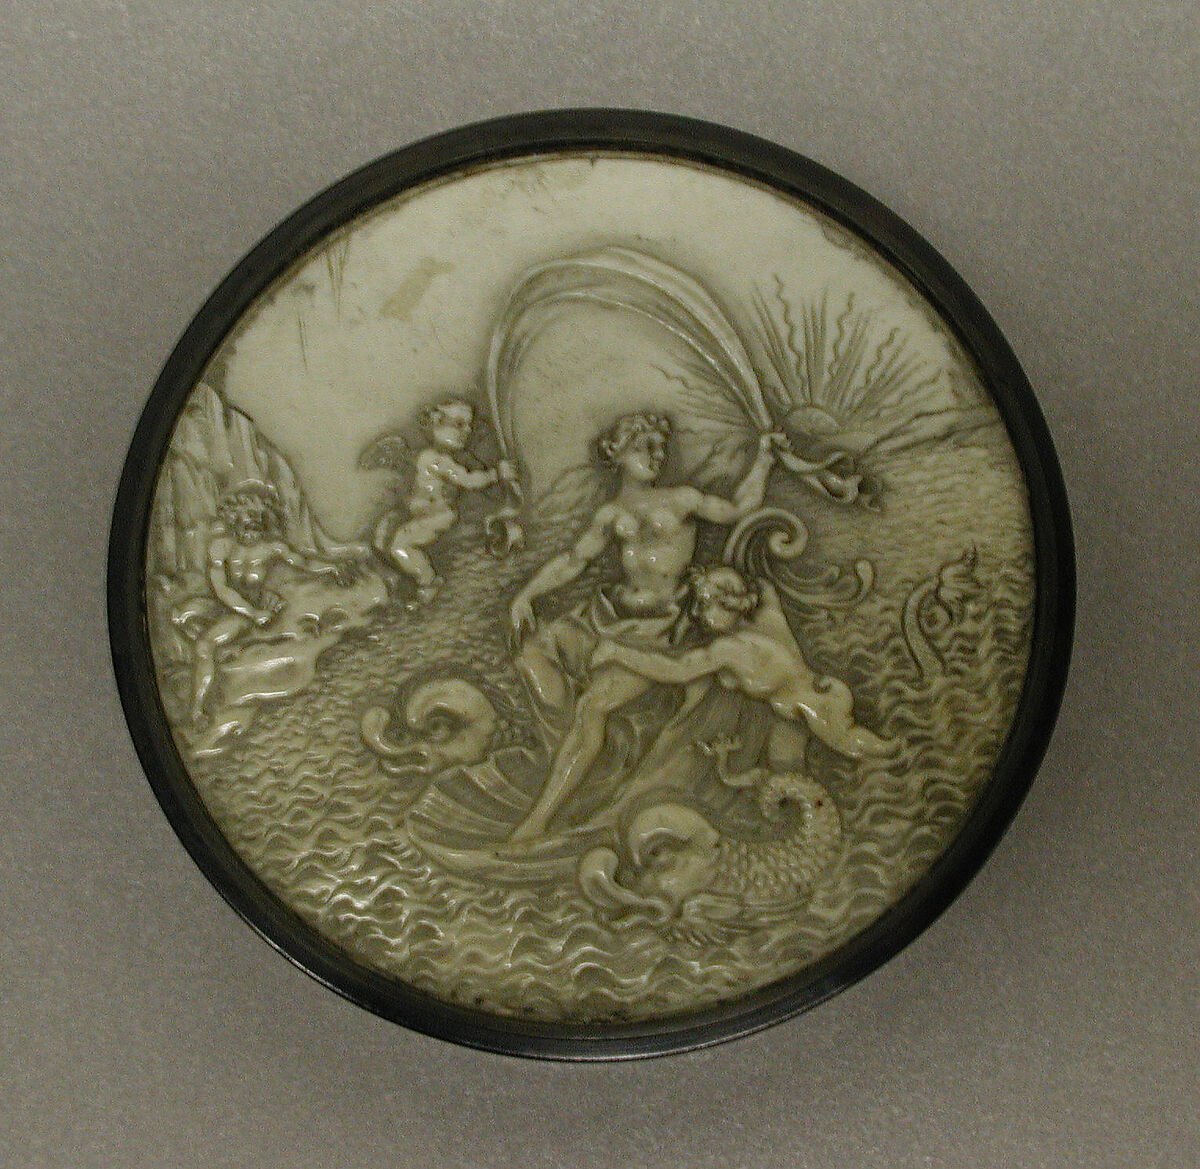 Venus Rising from the Sea, Disc: ivory; box: tortoiseshell, European 